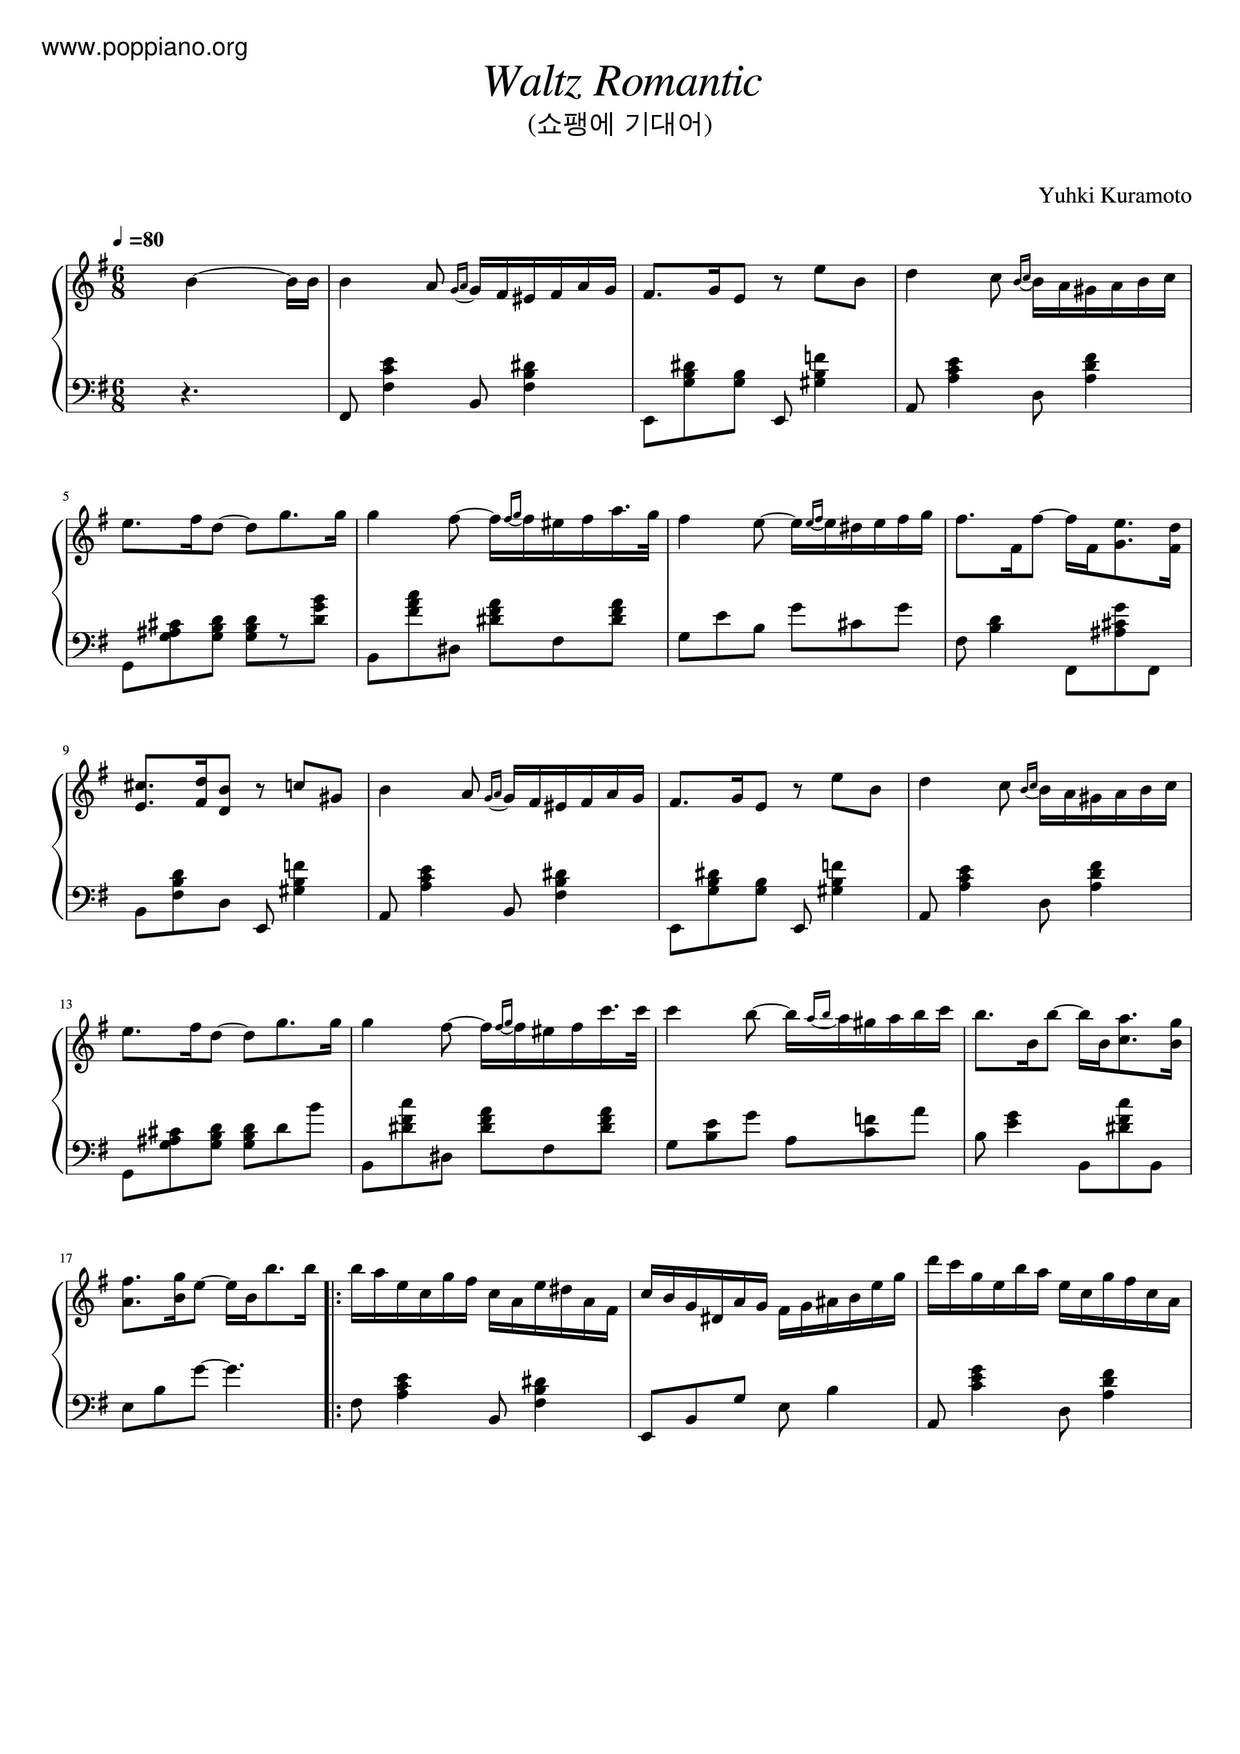 Waltz Romantic Score